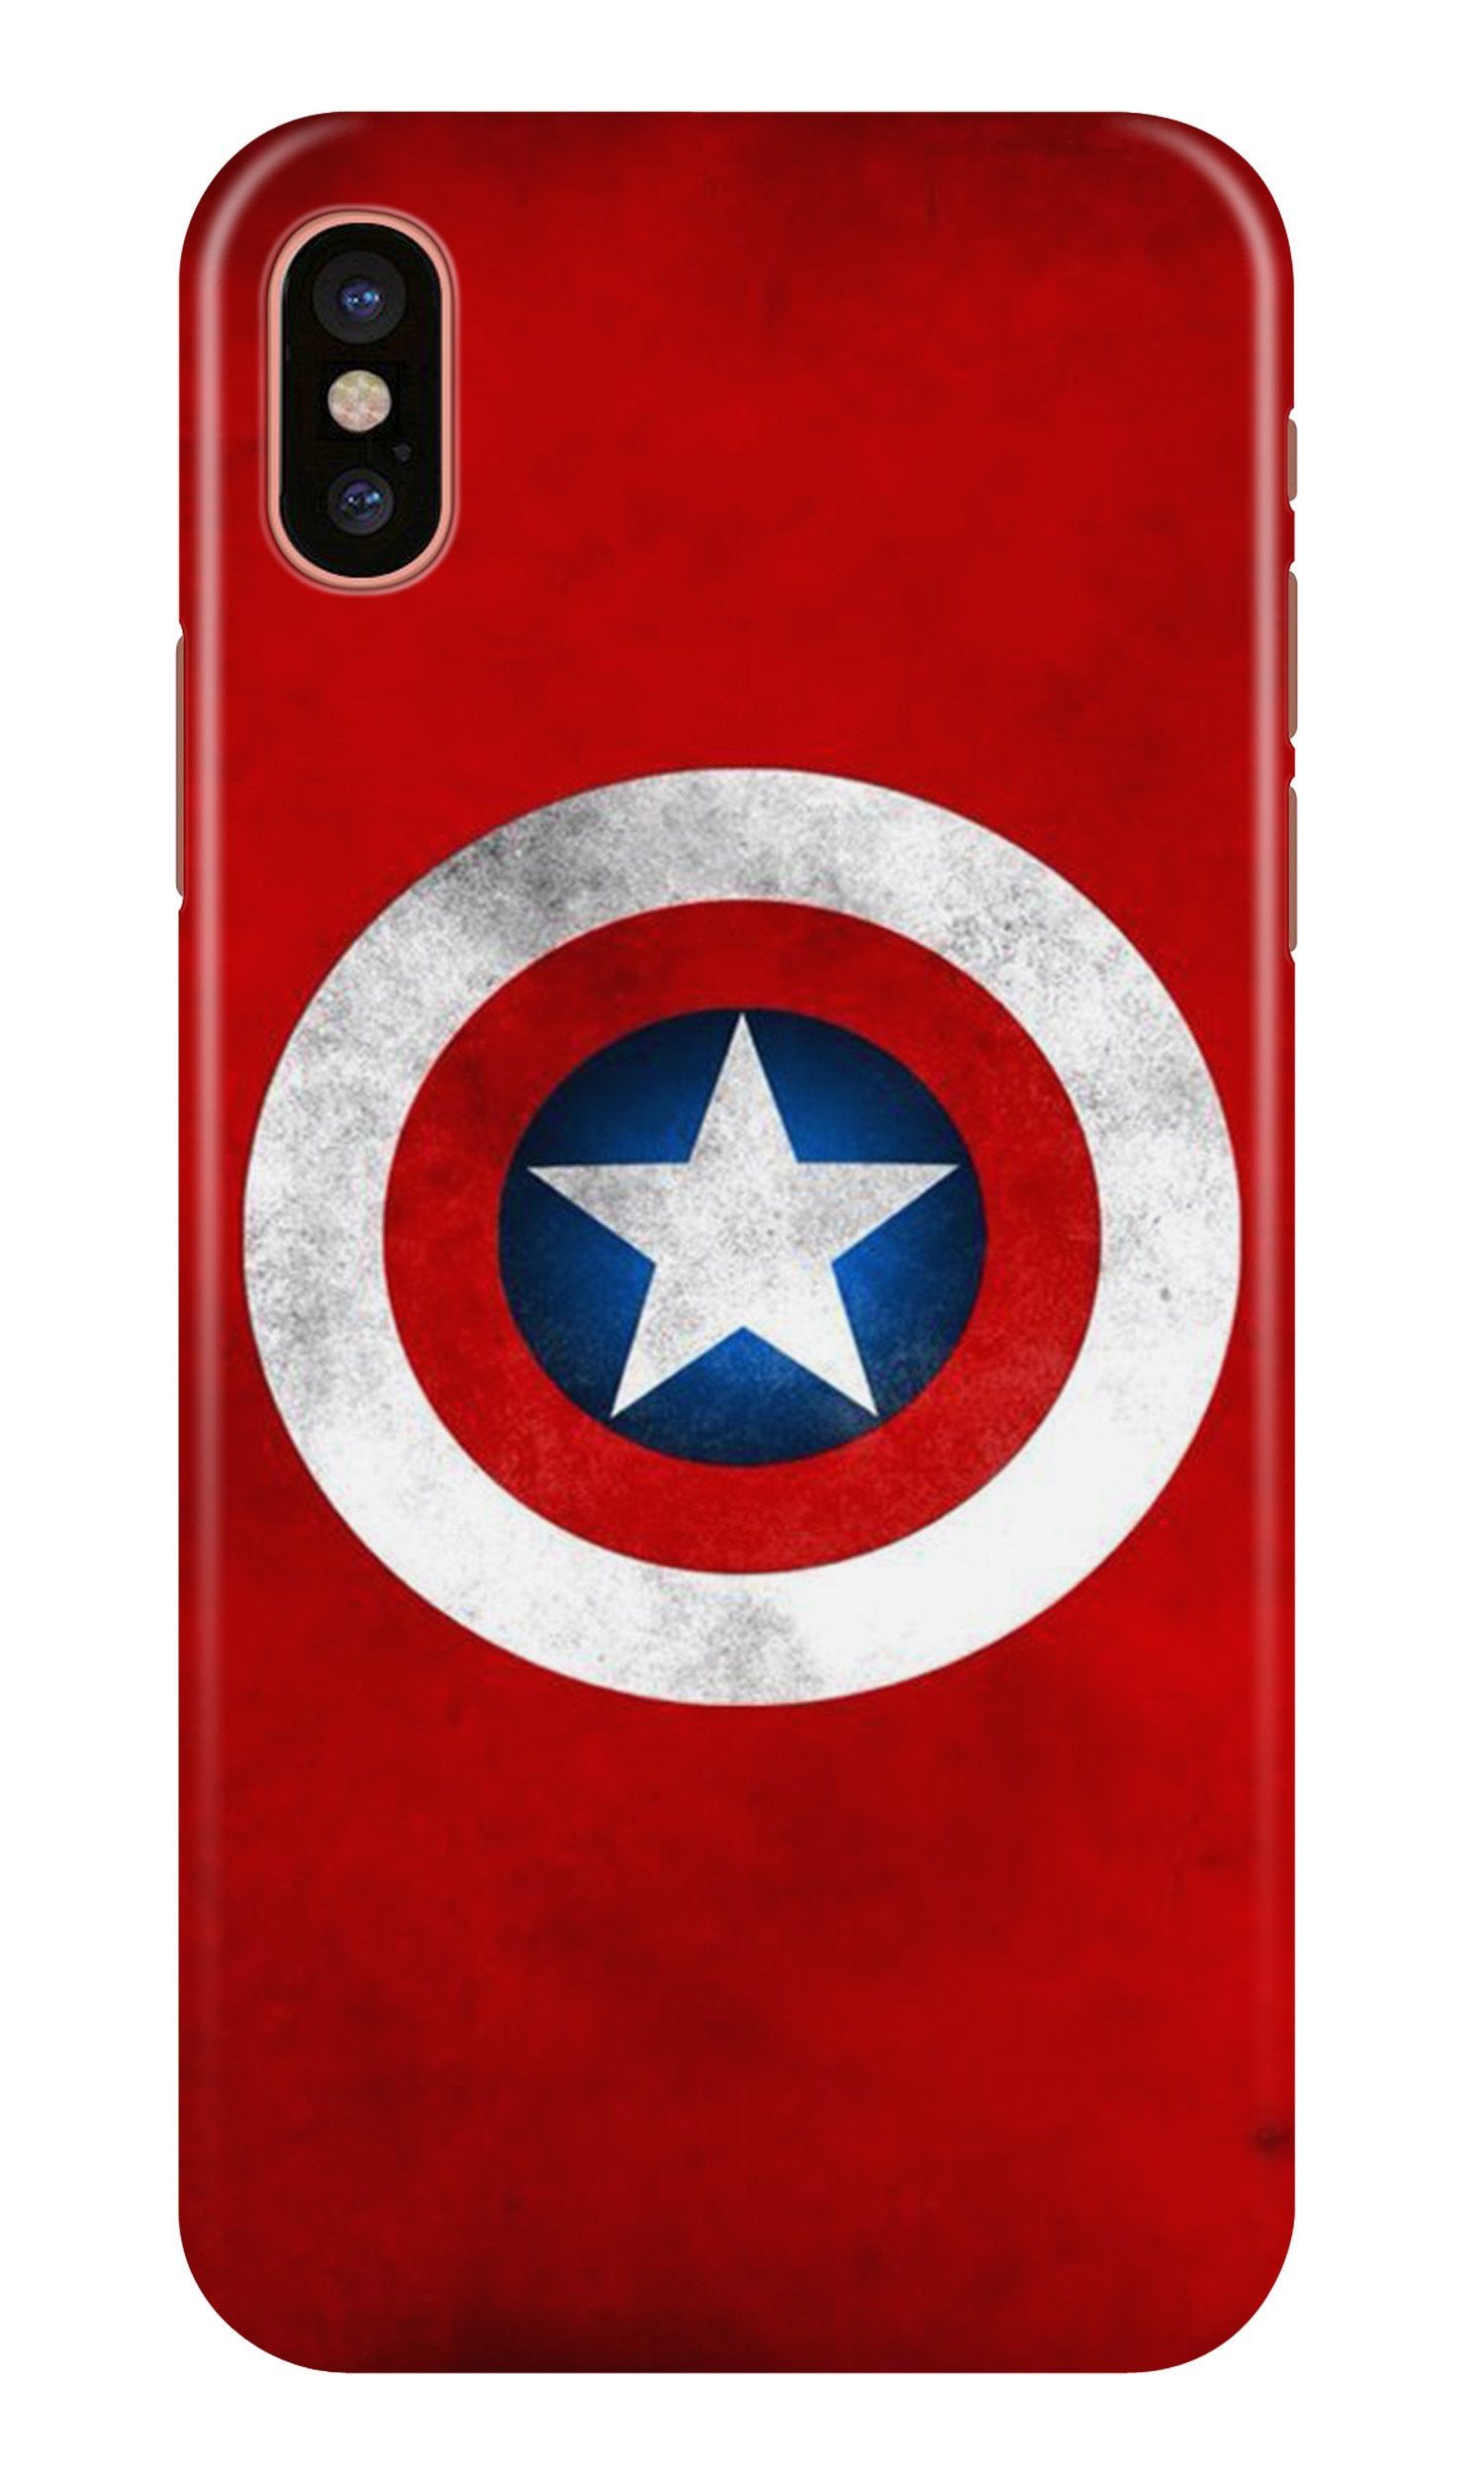 Captain America Case for iPhone Xr (Design No. 249)